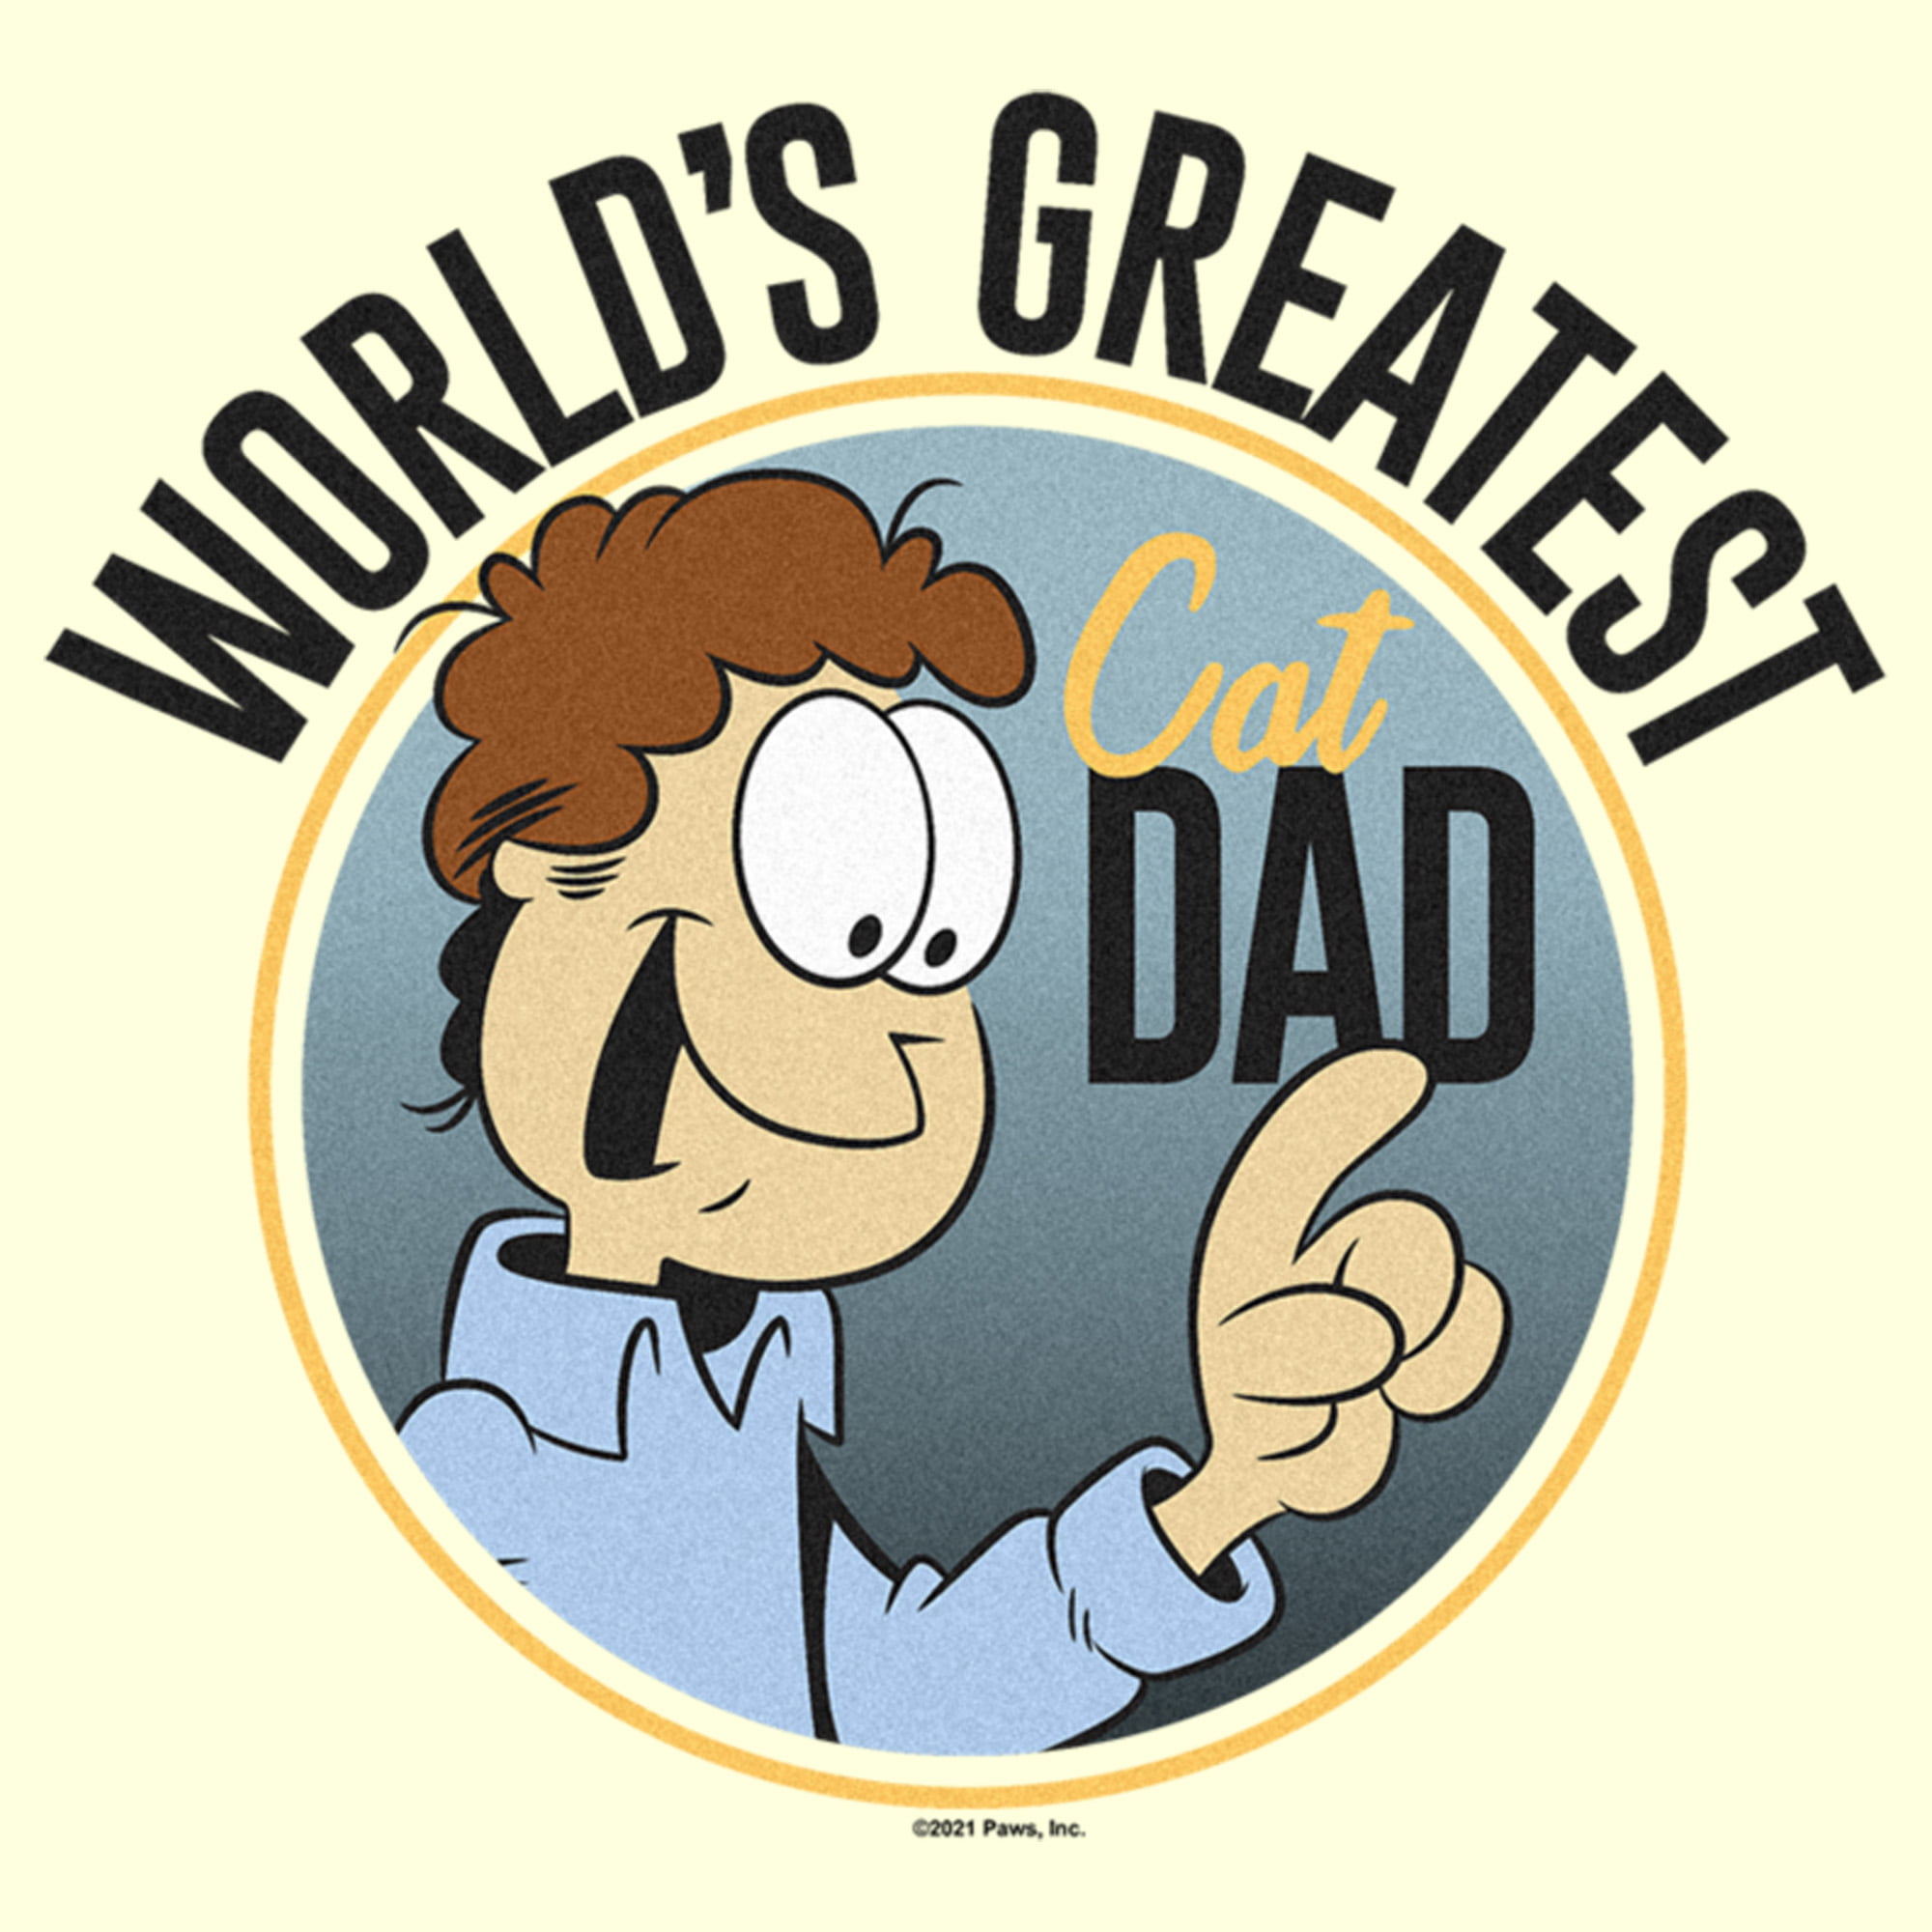 Men's Garfield World's Greatest Cat Dad Jon Arbuckle Graphic Tee Beige  Medium 